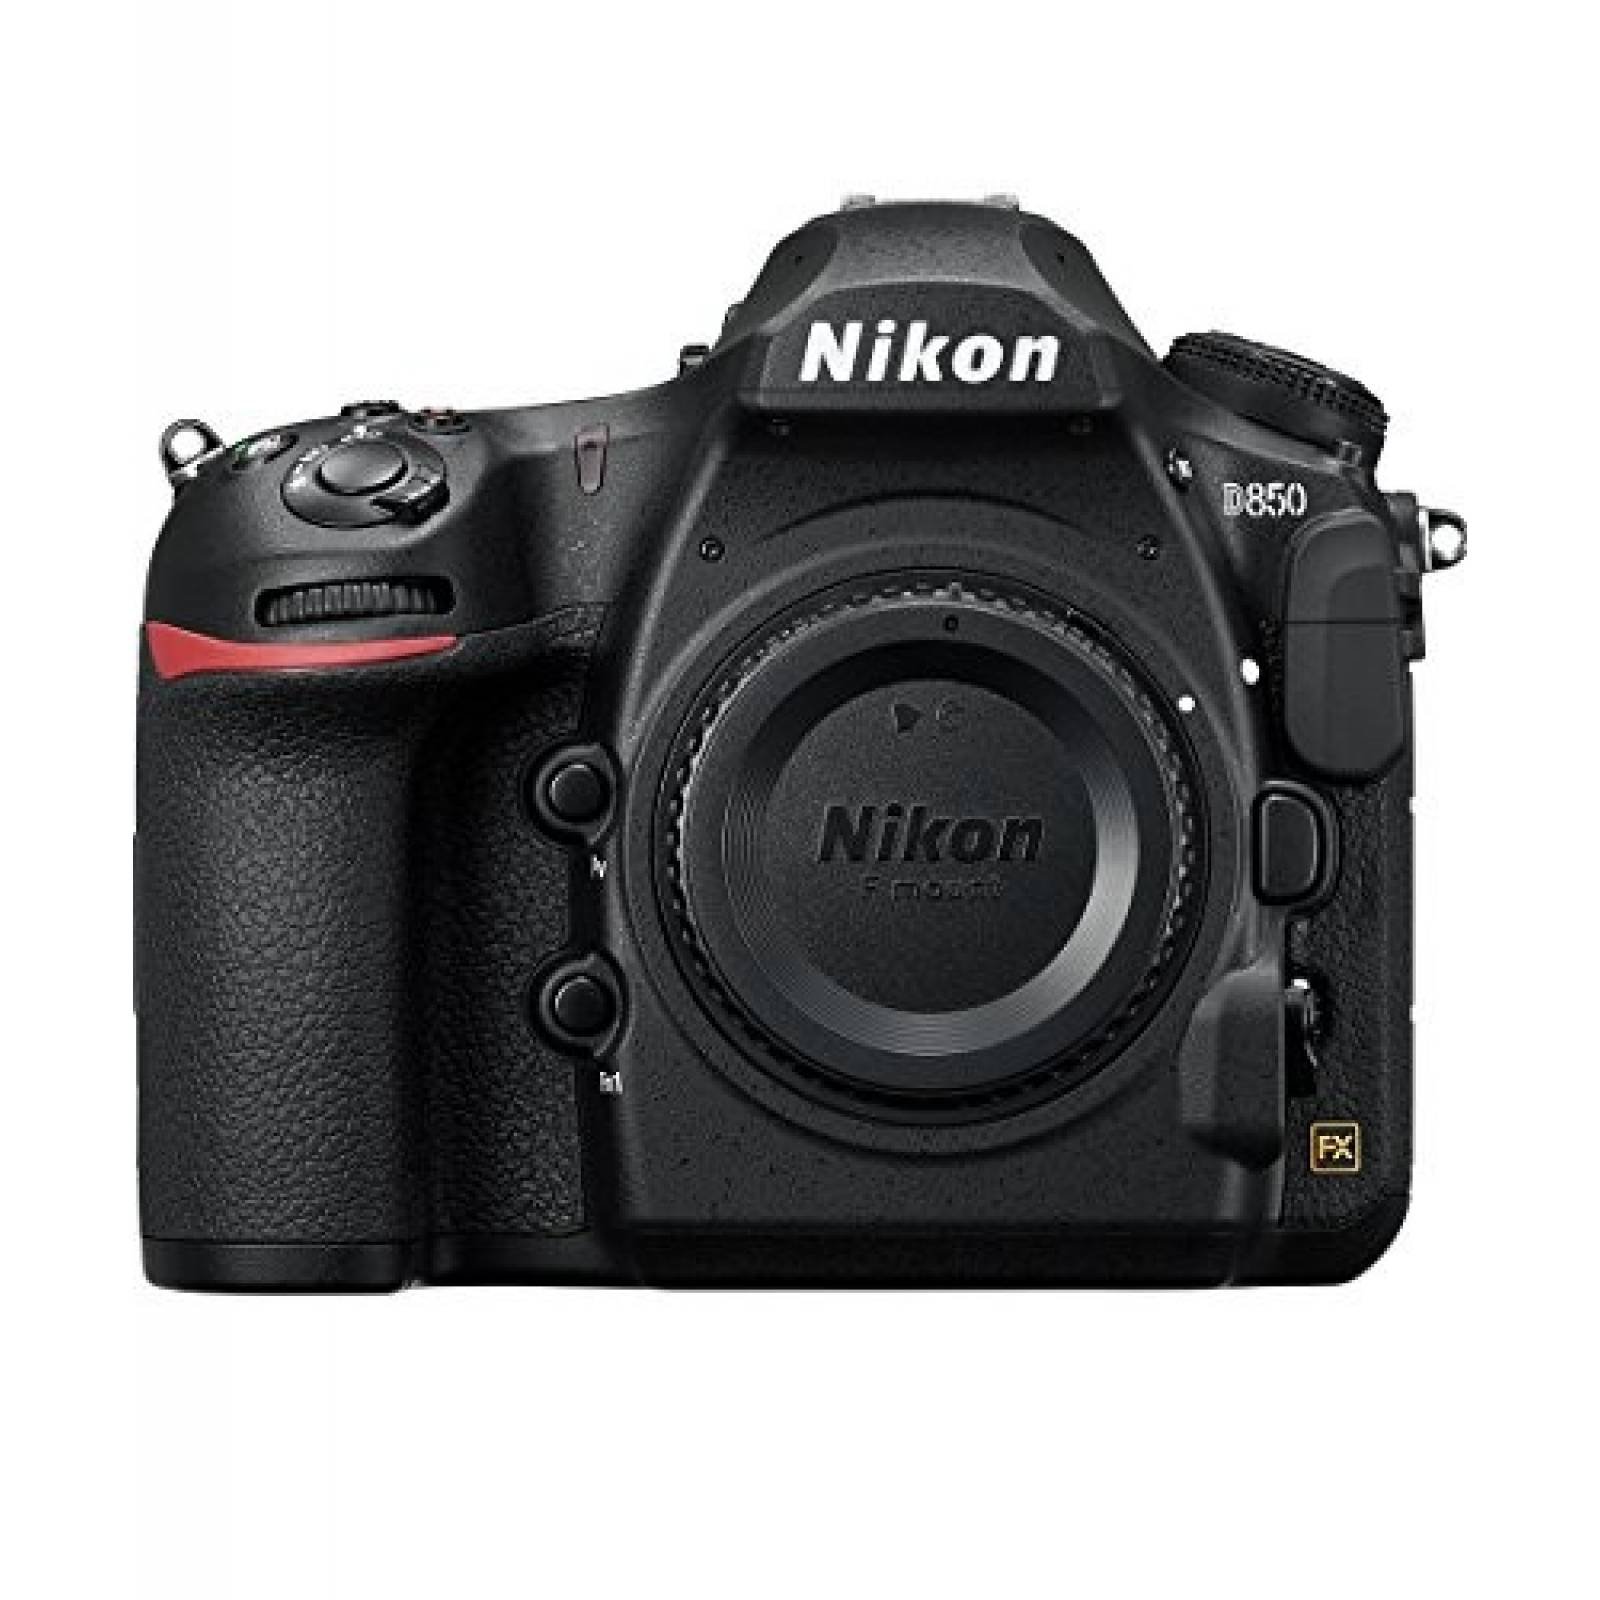 Cámara DSLR Nikon D850 Formato DX SLR sólo cuerpo